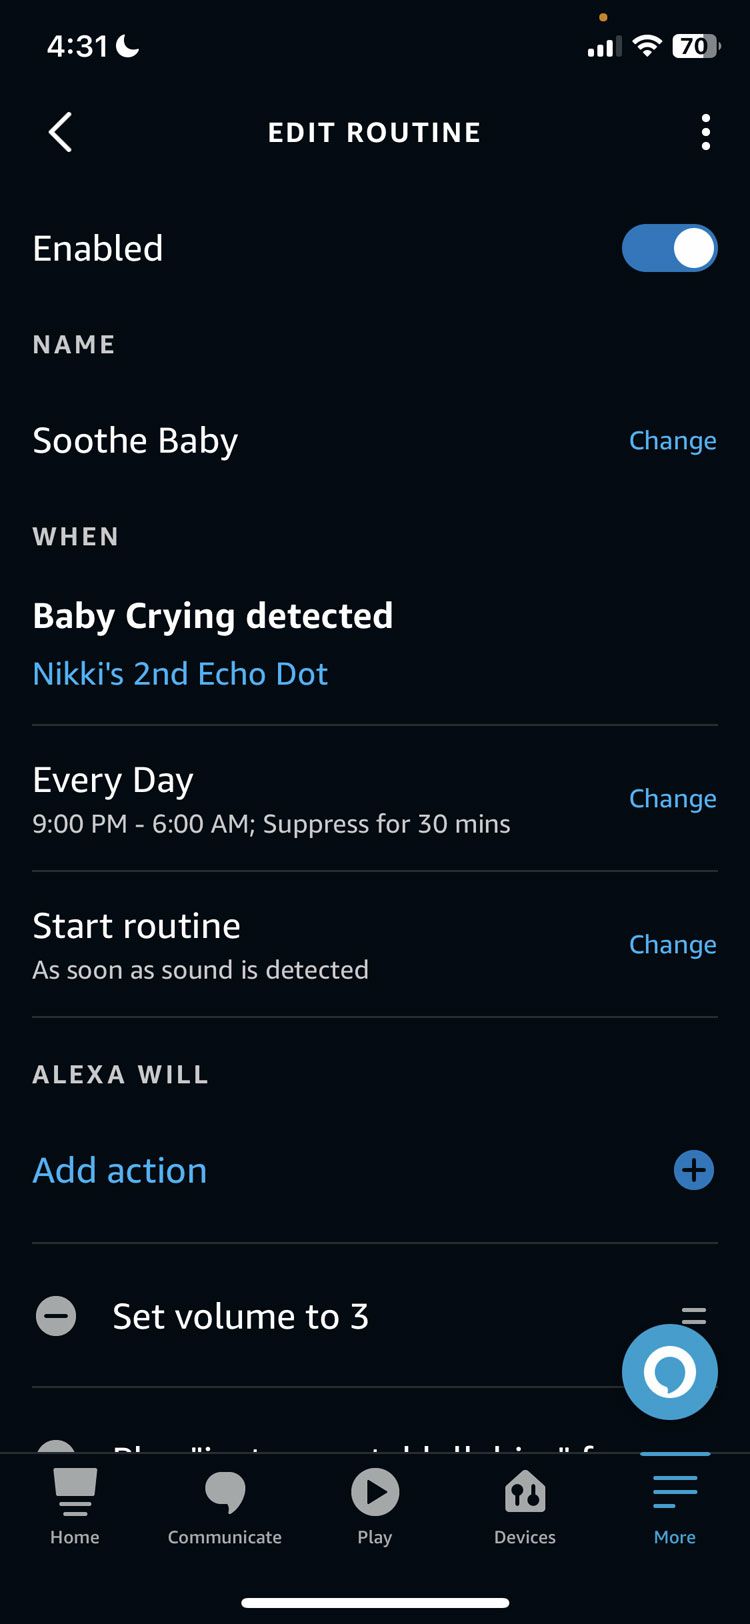 Amazon Alexa App edit Soothe Baby Routine